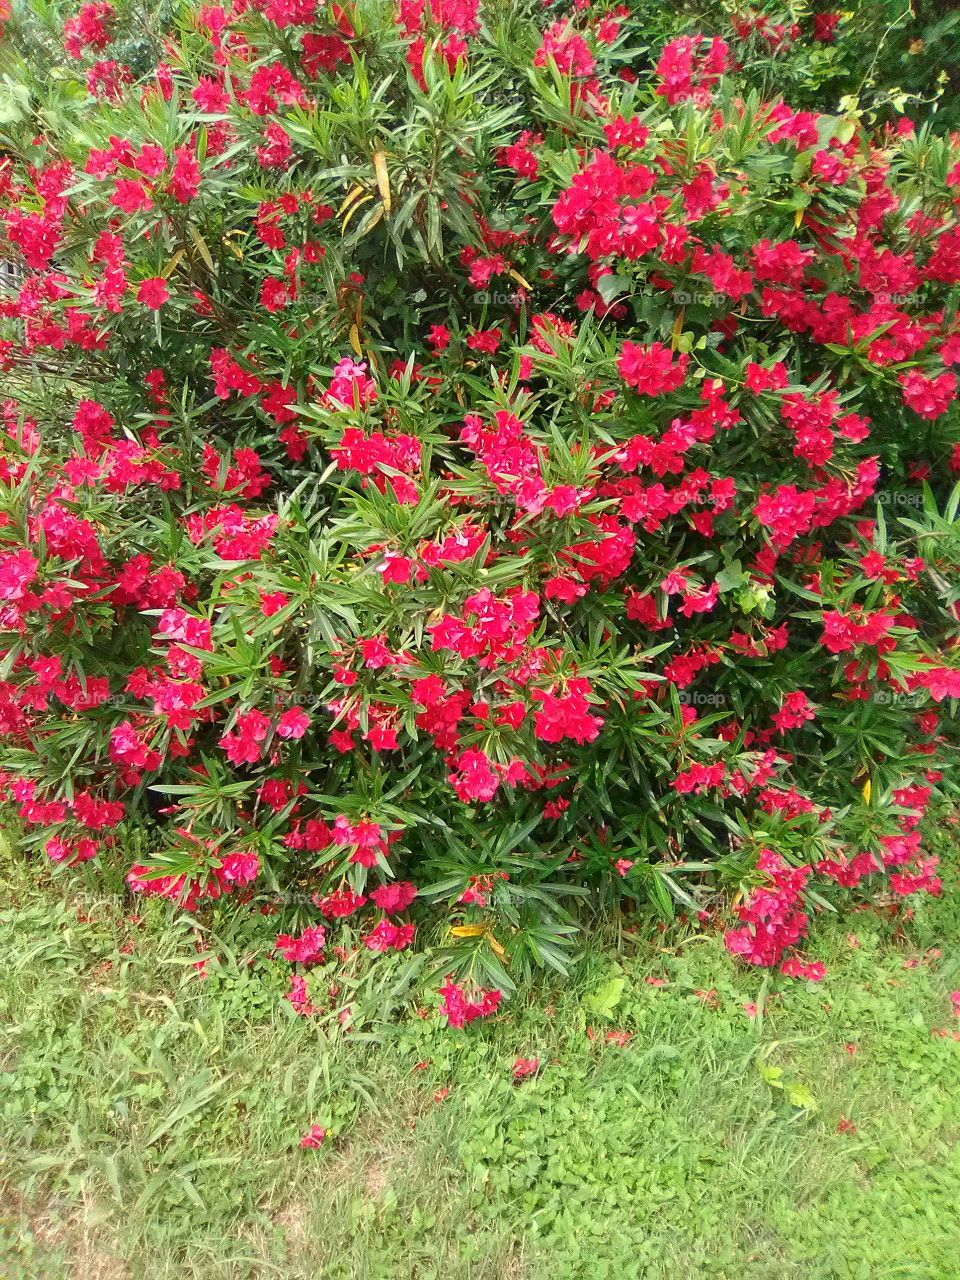 Vibrant red wildflowers blooming abundantly along roadside